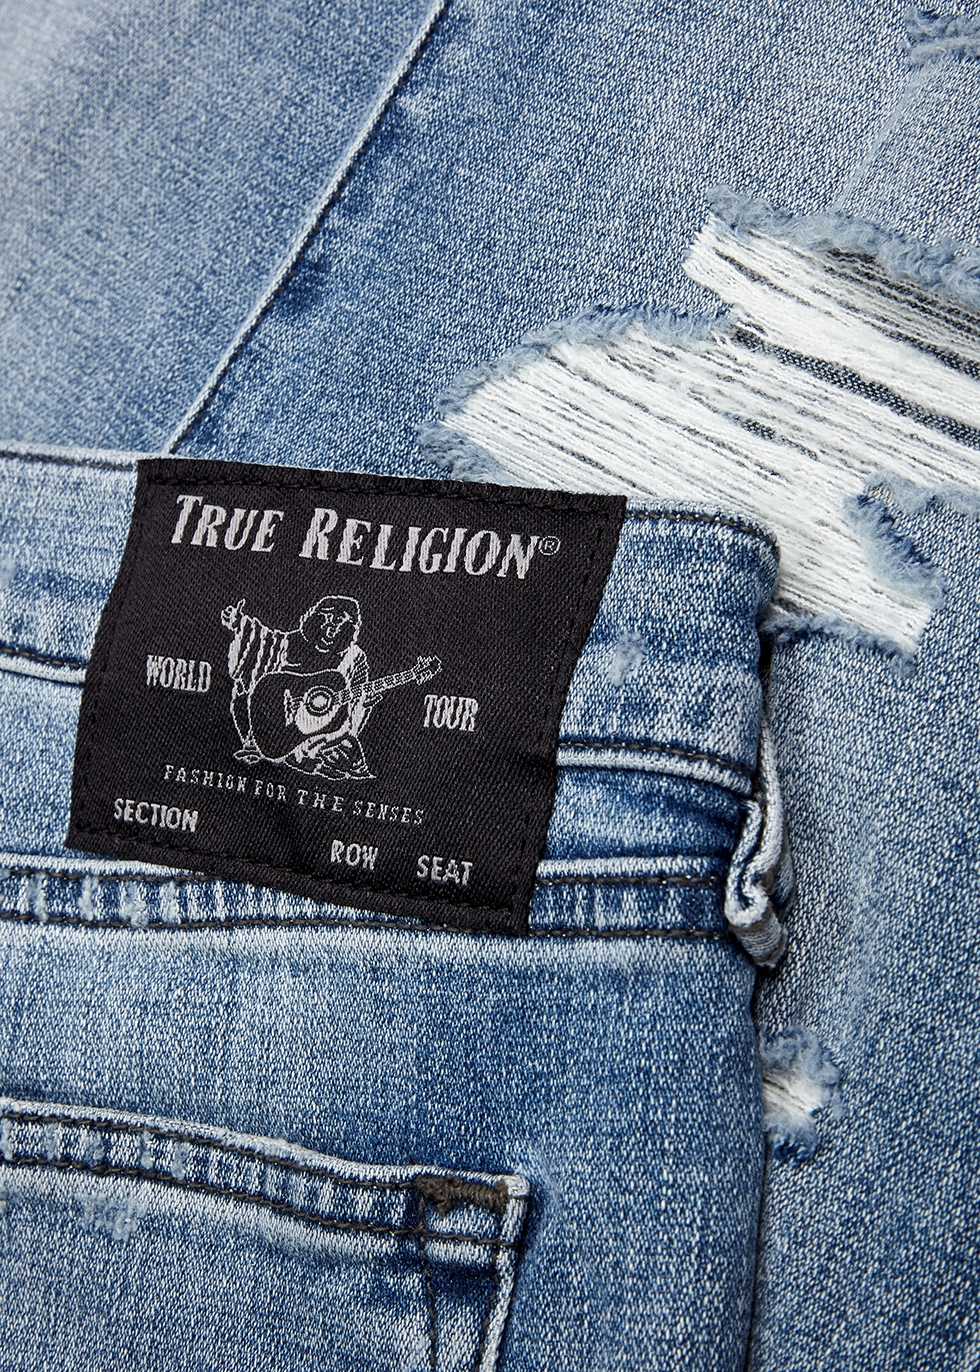 true religion light blue jeans